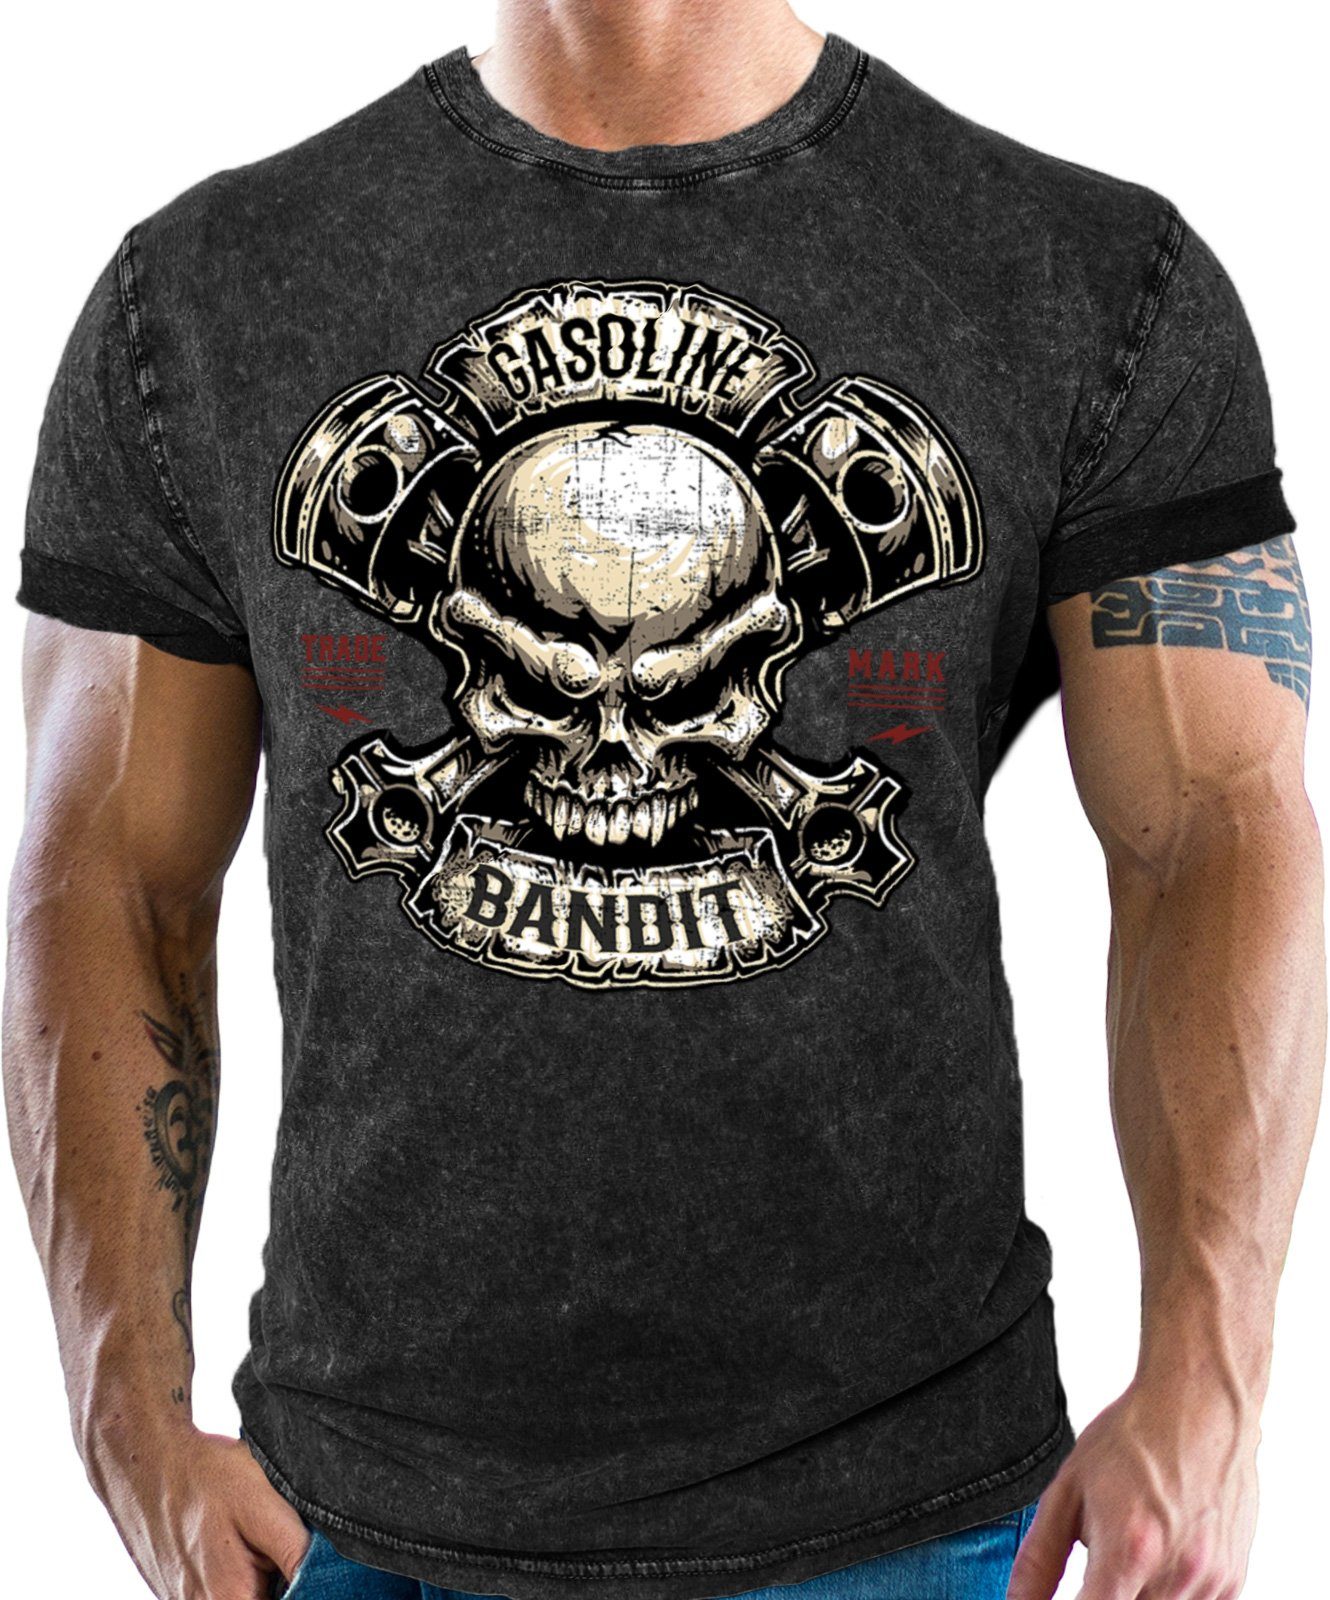 GASOLINE BANDIT® T-Shirt in washed black look für Biker Racer Fans: Piston Skull